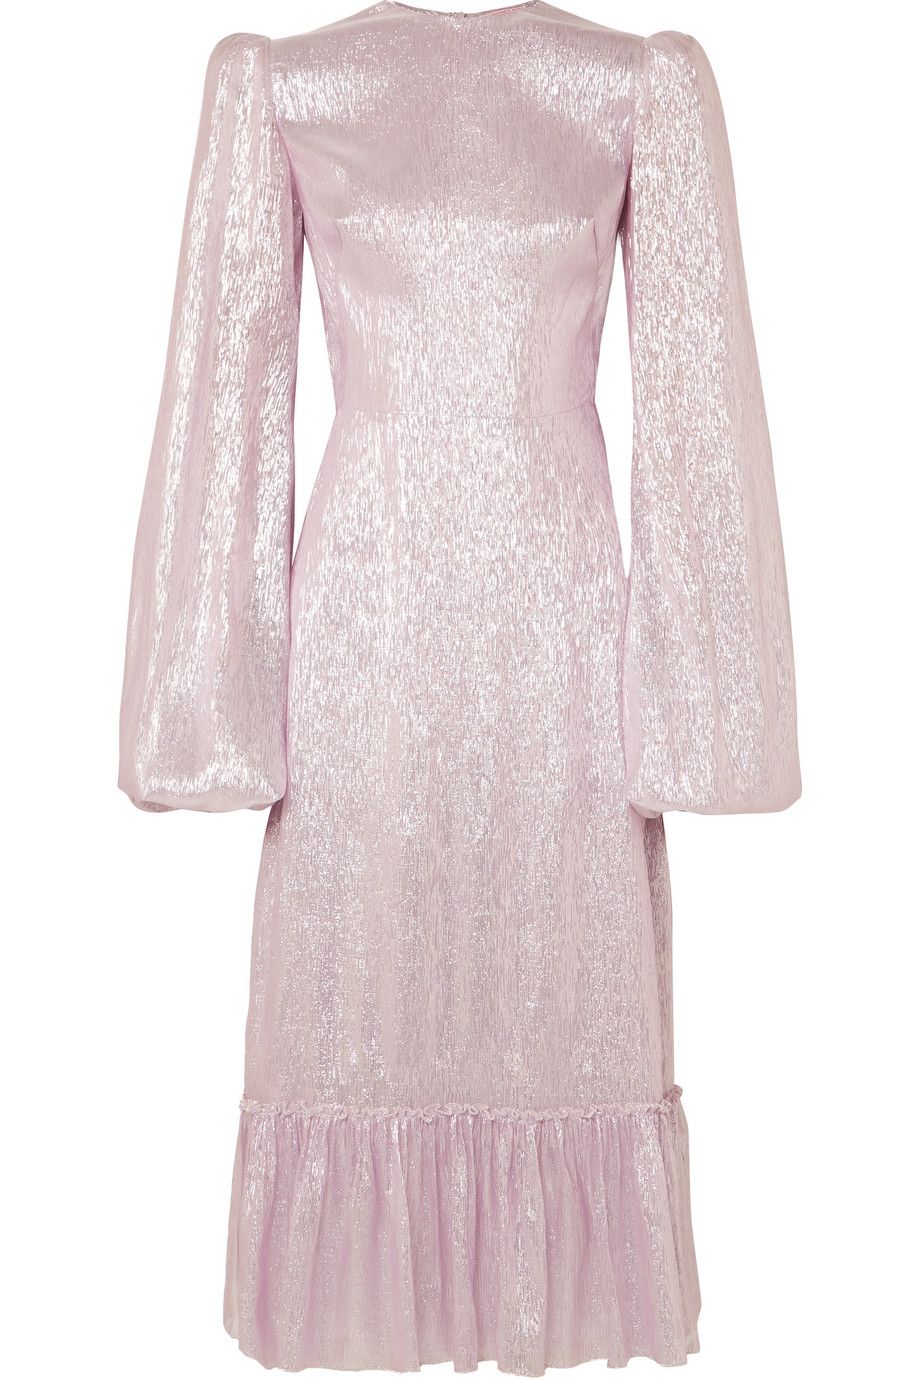 The Laura Ashley Prairie Dress Is Back: Shop Similar - Victorian Neck ...